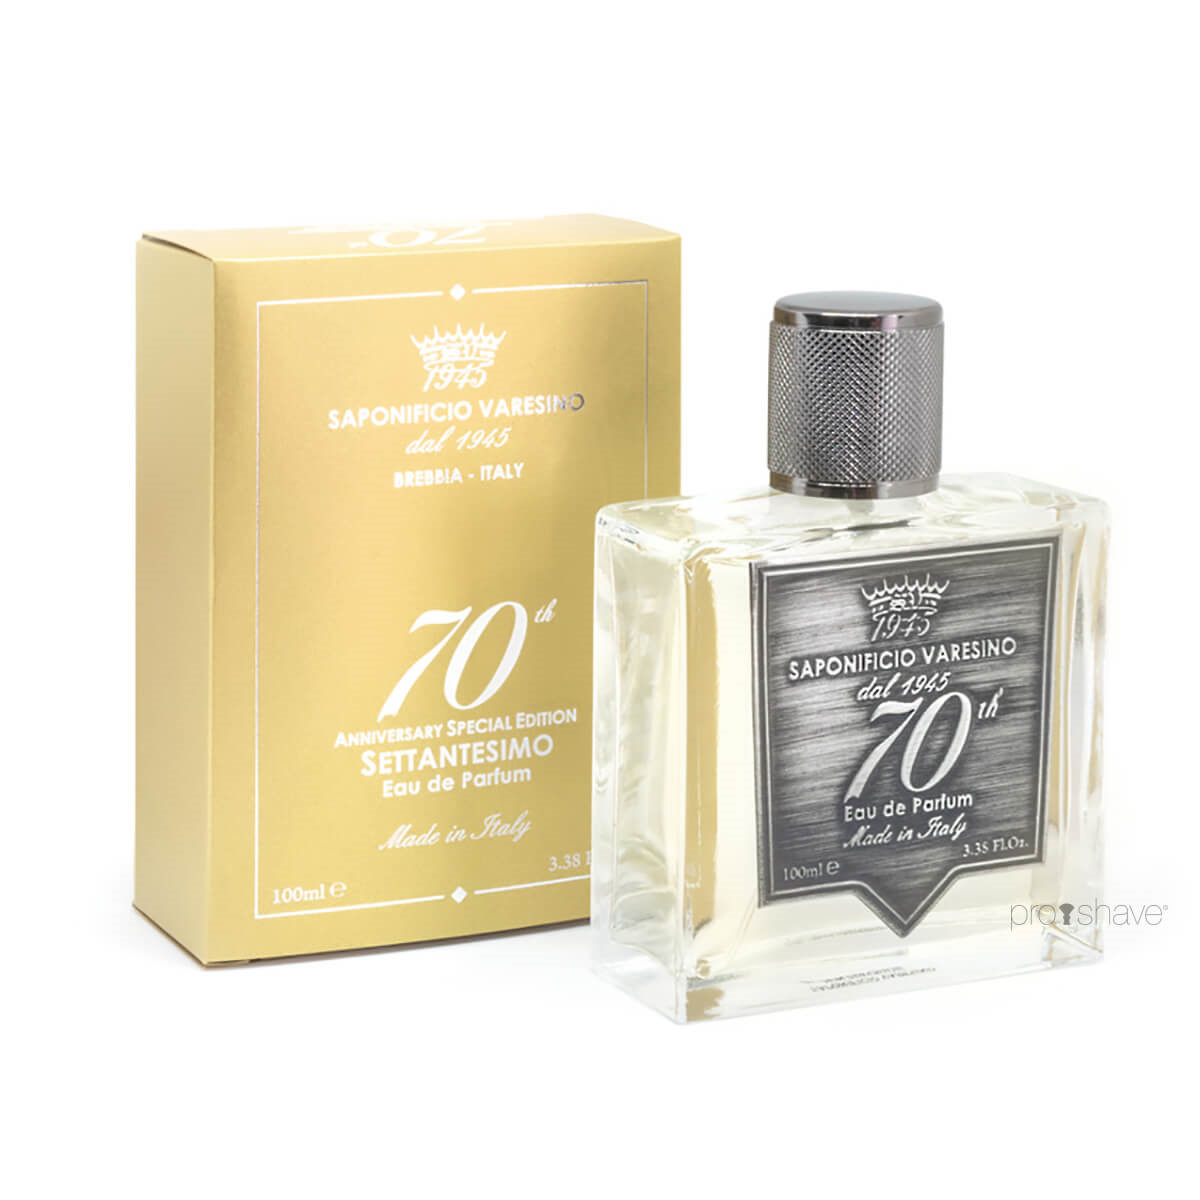 Se Saponificio Varesino Eau de Parfum, 70th Anniversary, 100 ml. hos Proshave